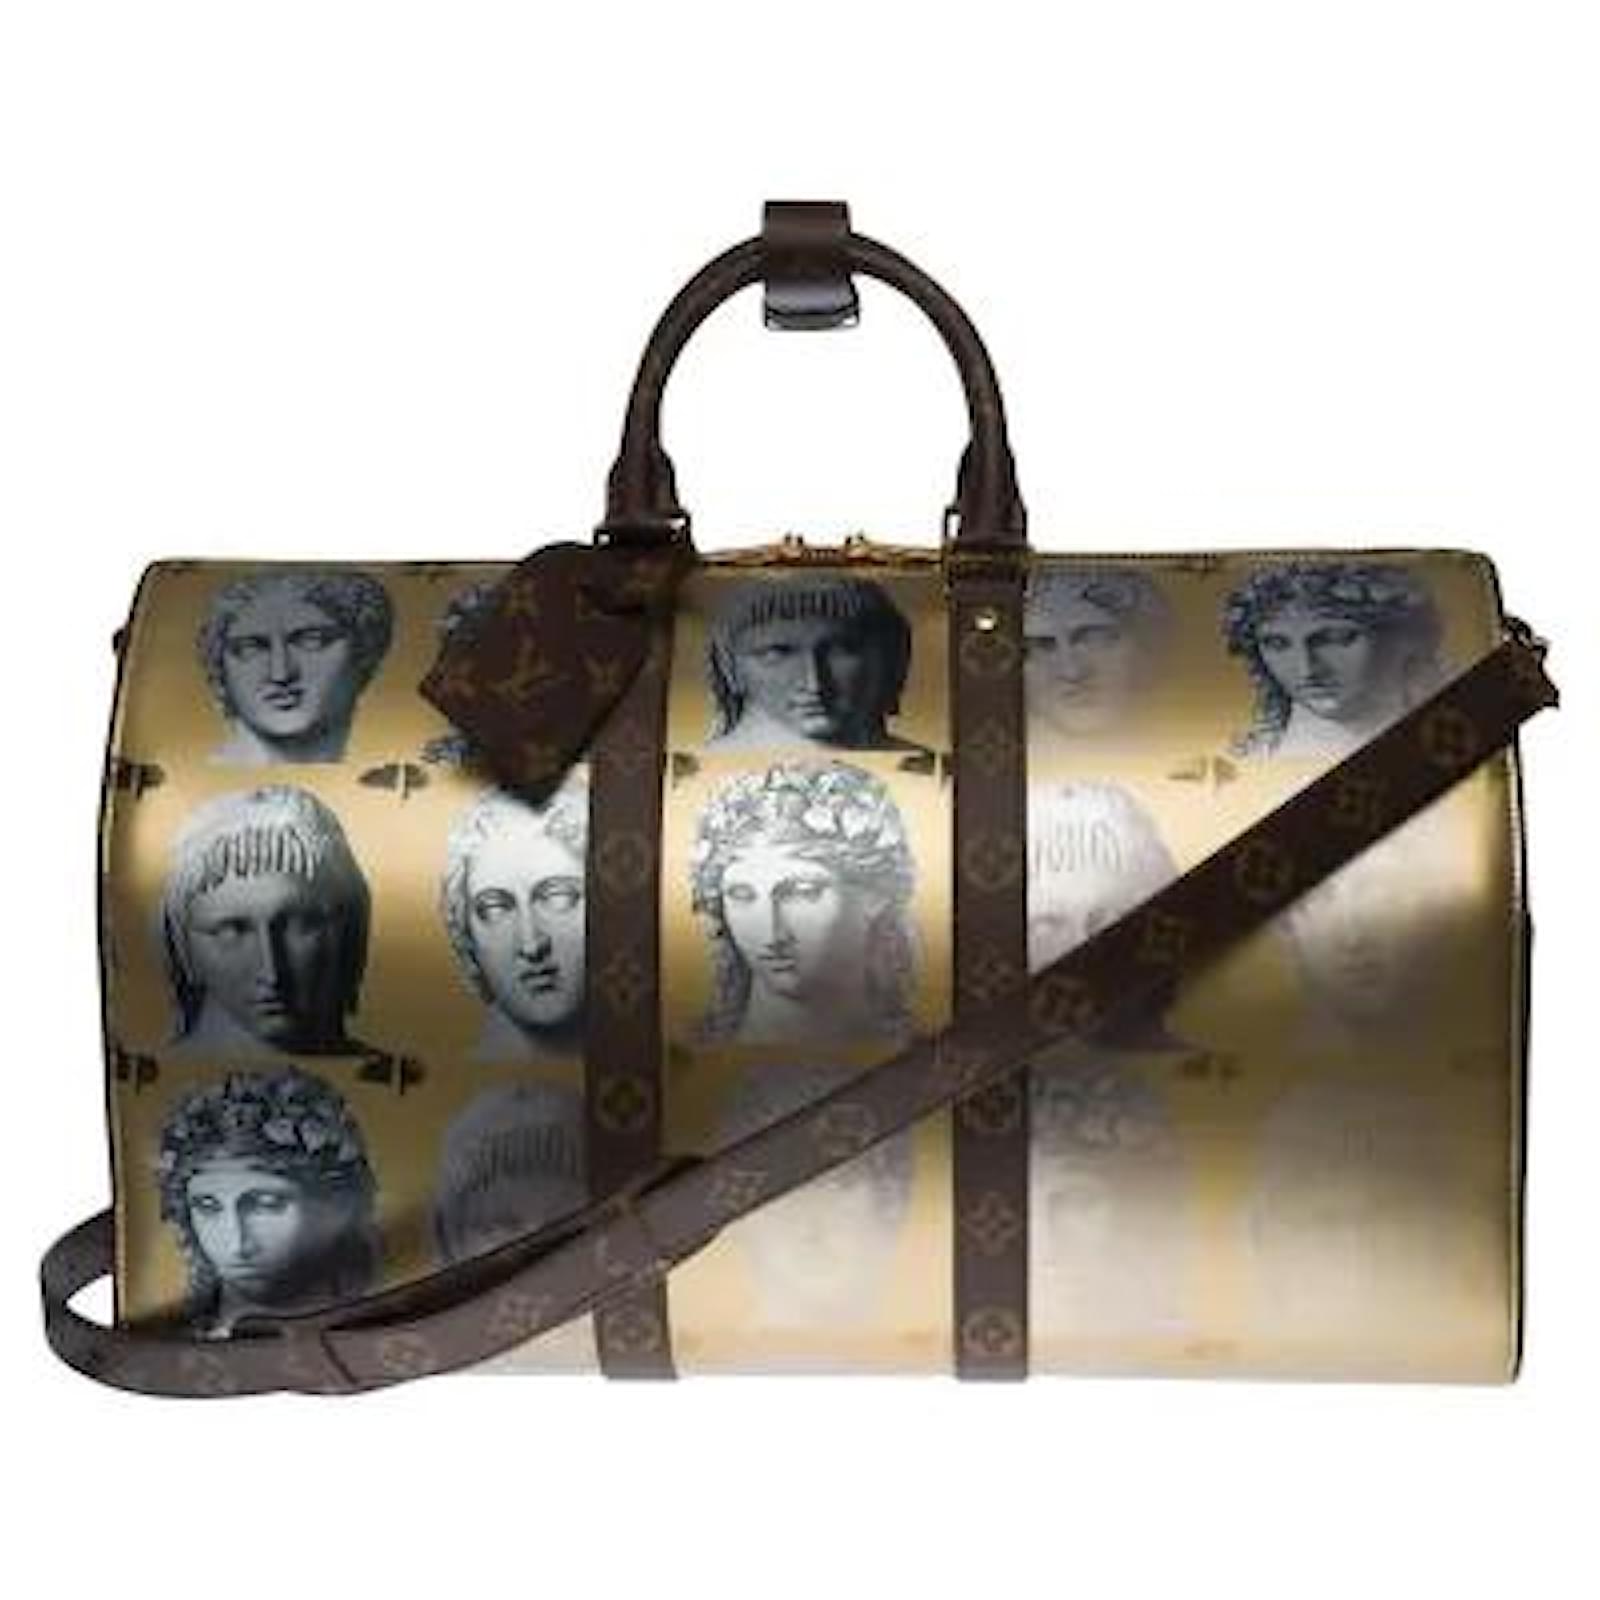 limited edition louis vuitton duffle bag